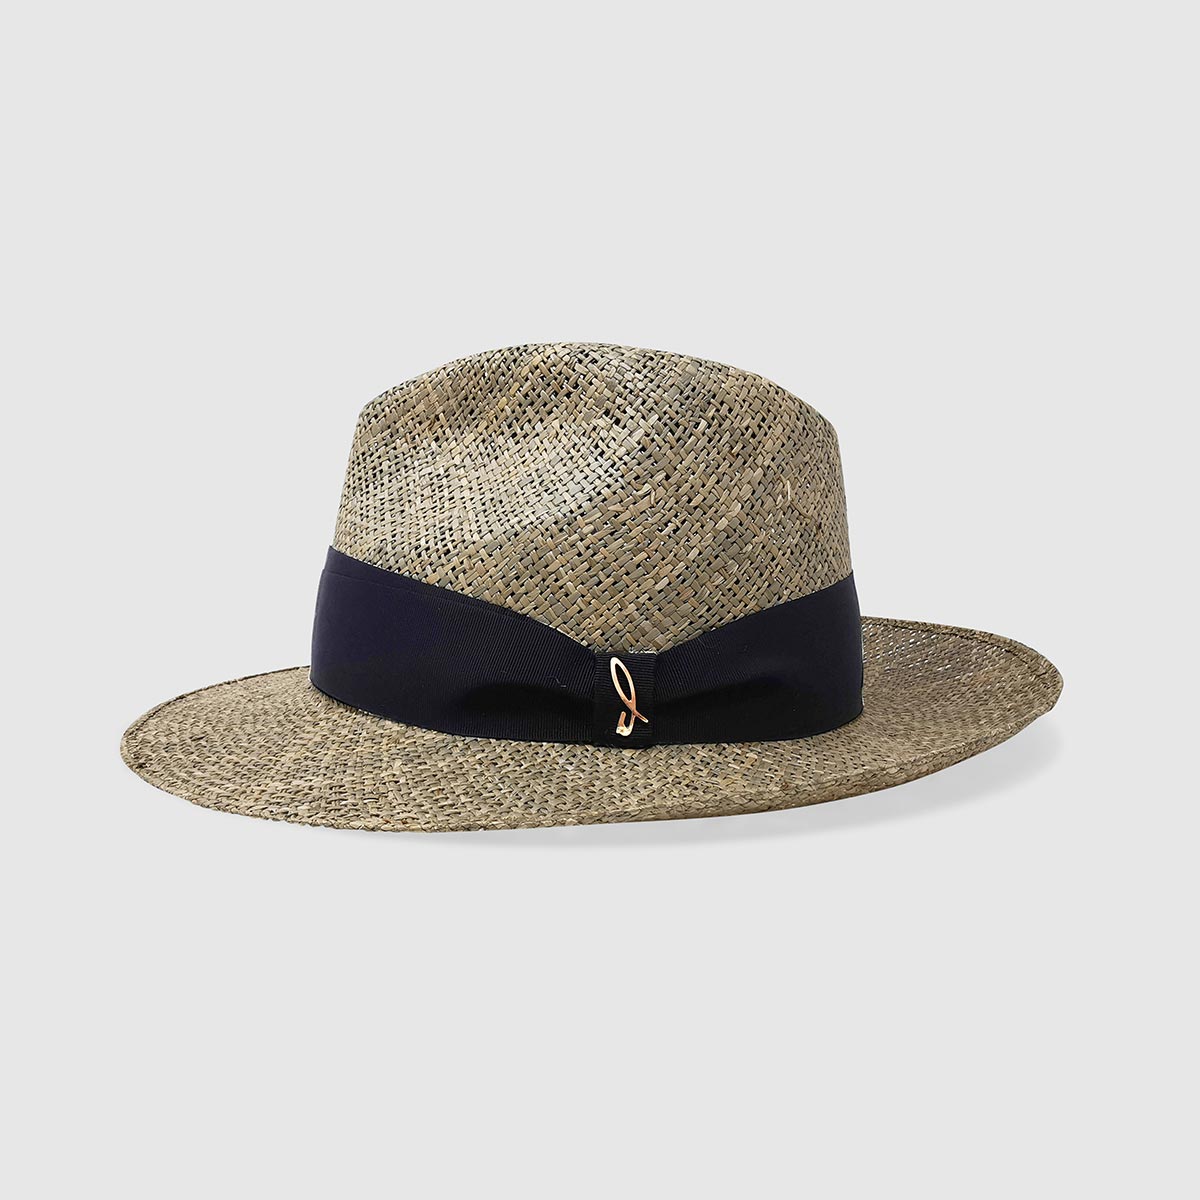 Drop Hat in Sea Straw with Blue Belt